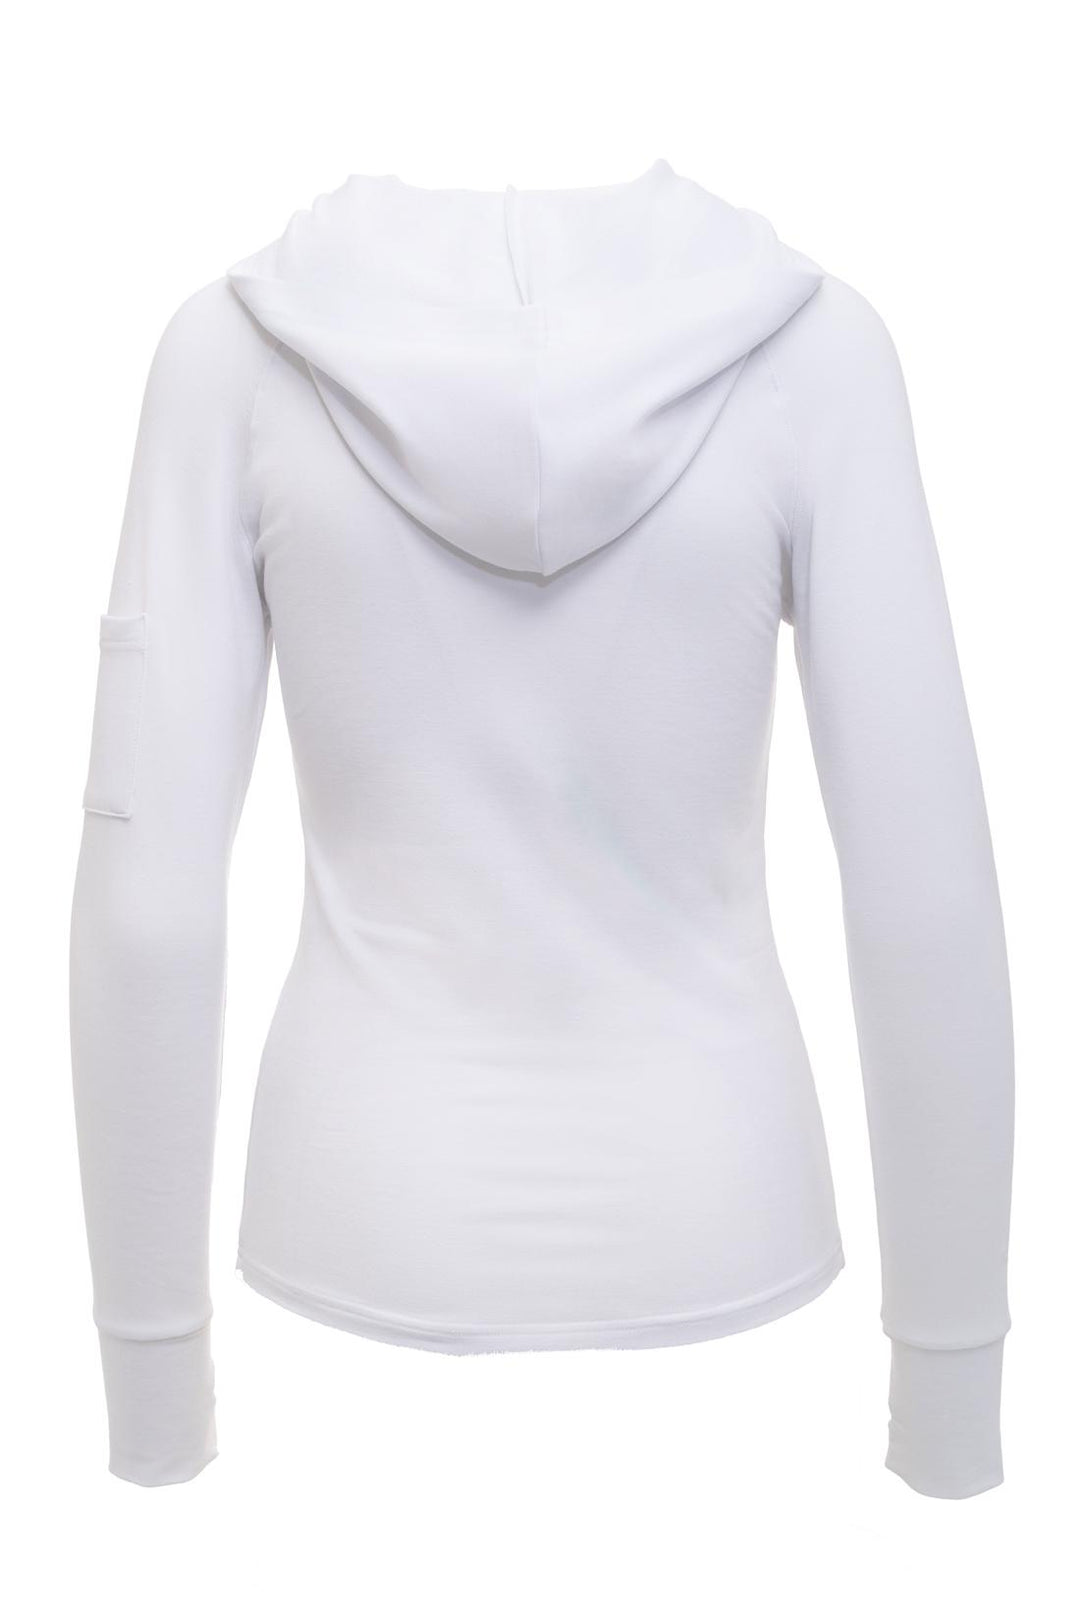 White women's mid length hoodie